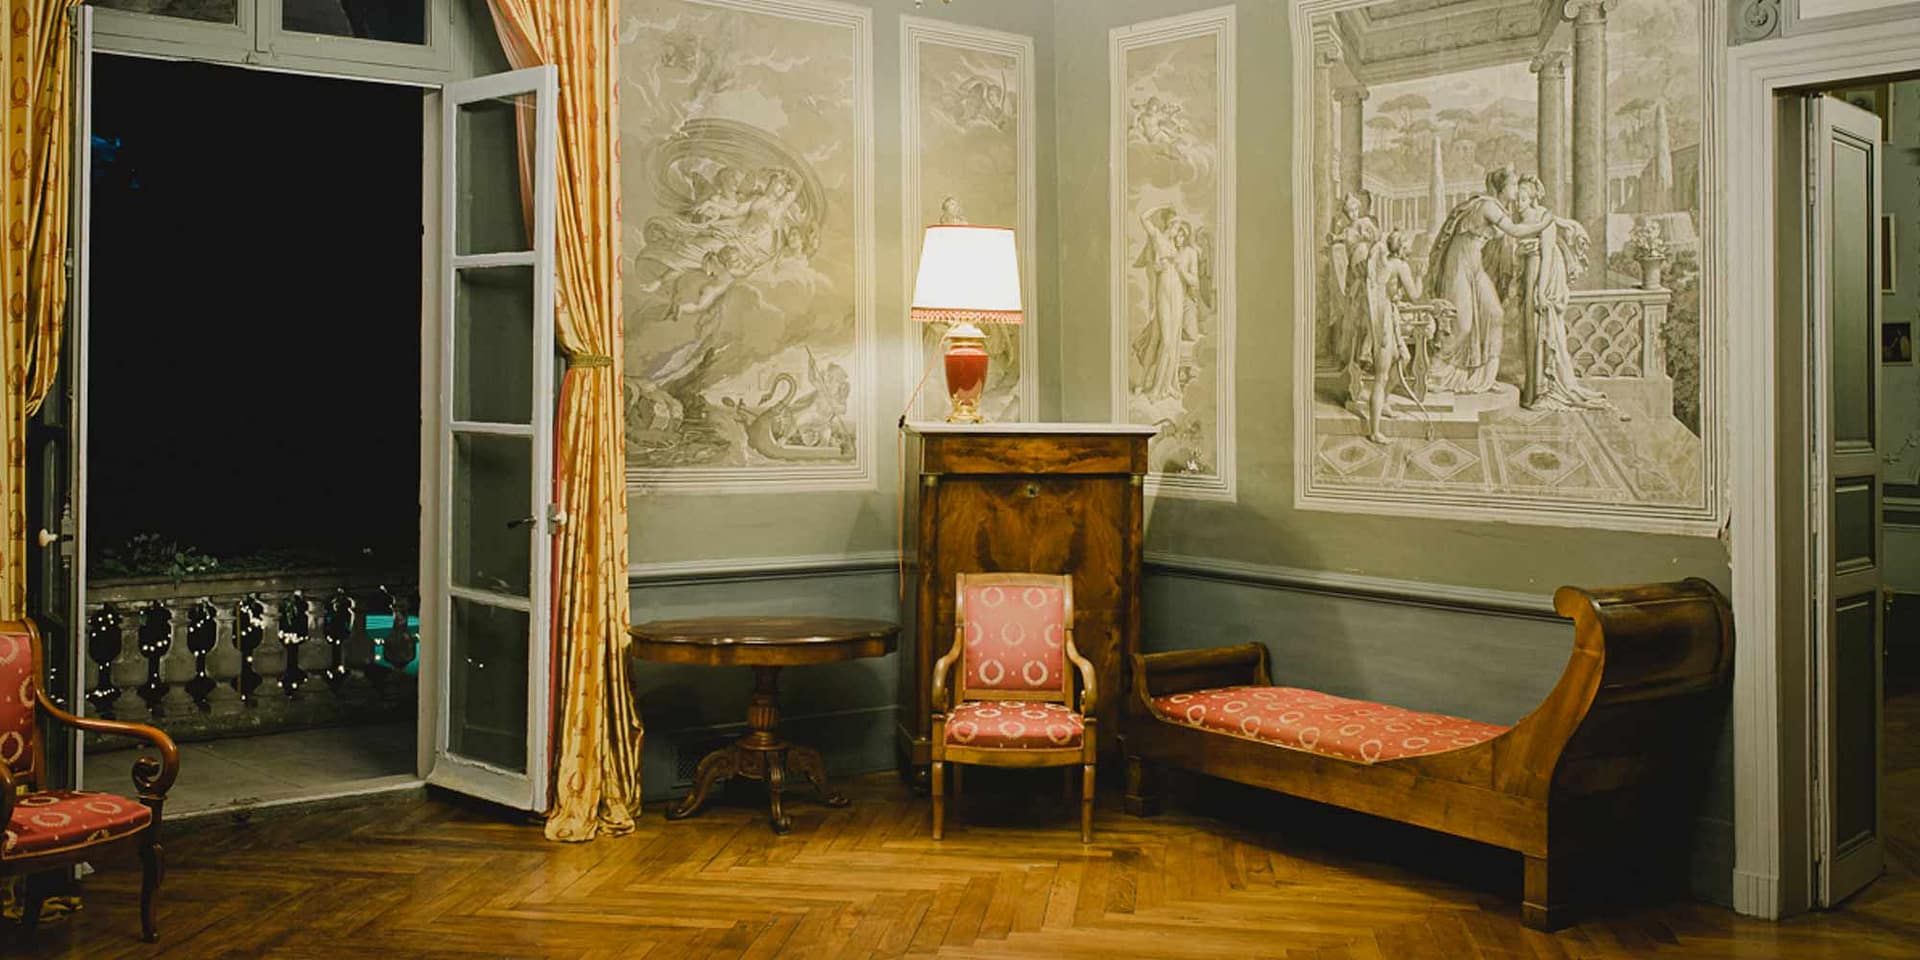 Chateau Leroy interior